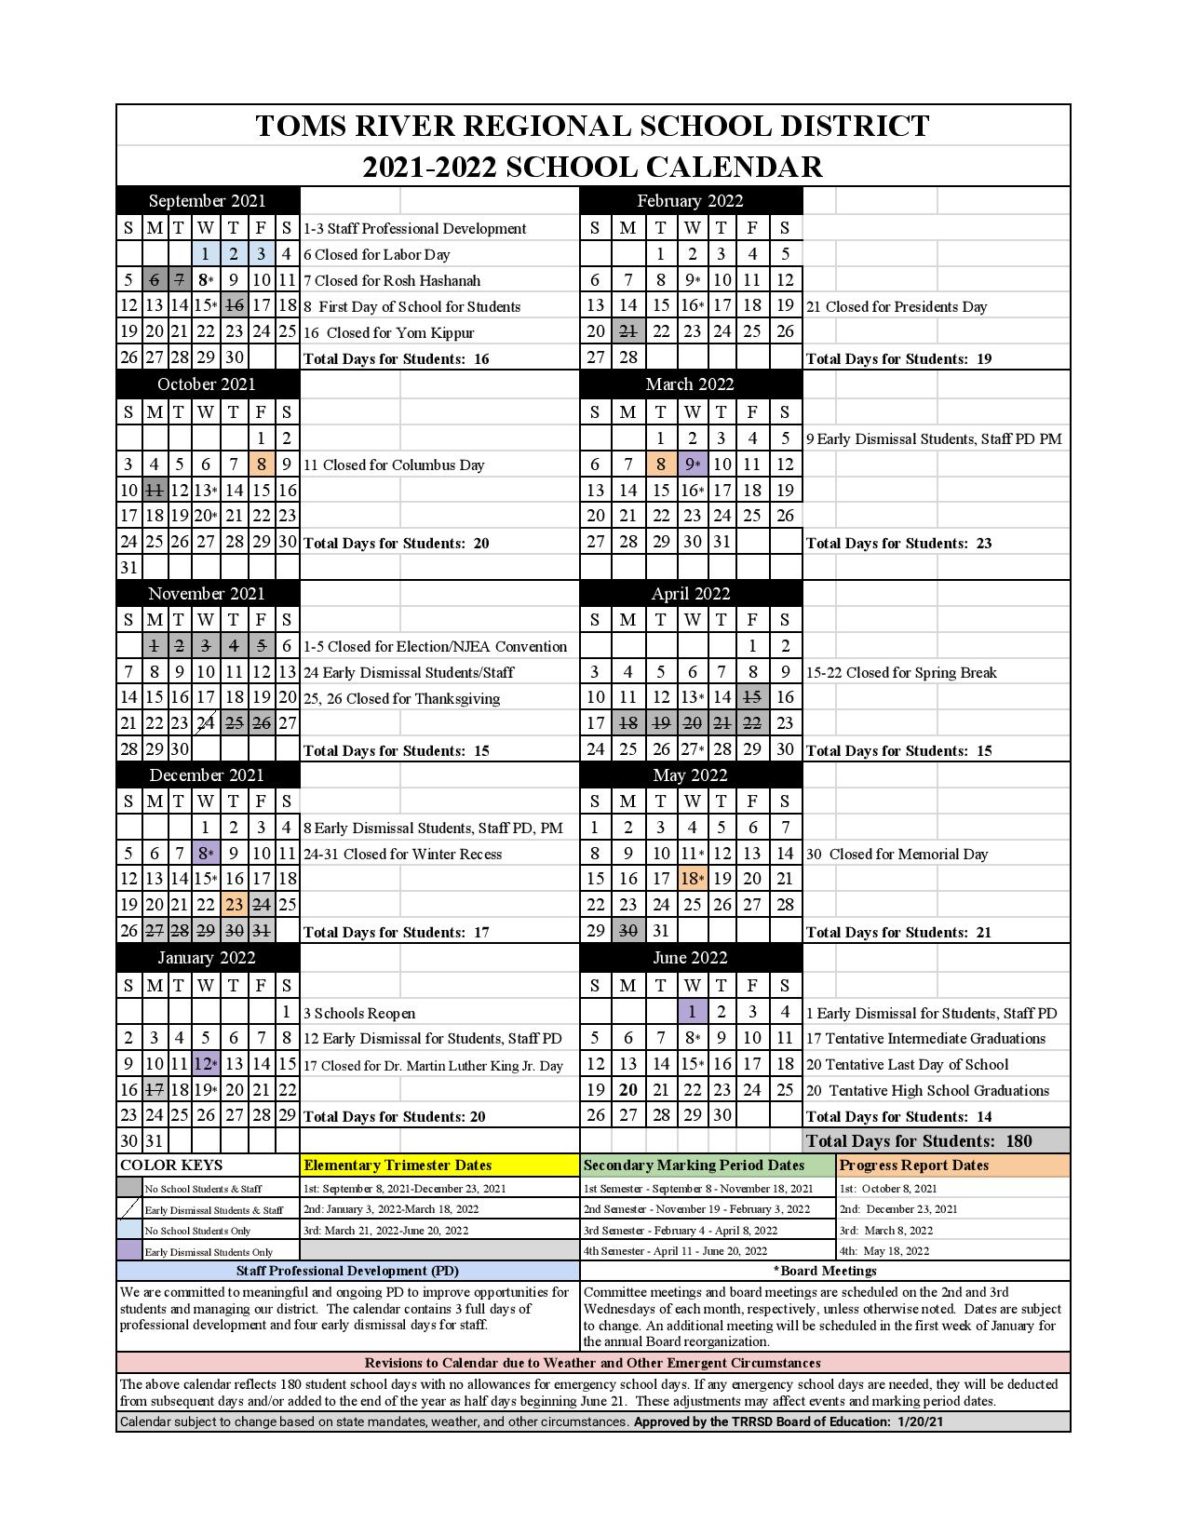 Toms River School District Calendar 2021 2022 In PDF